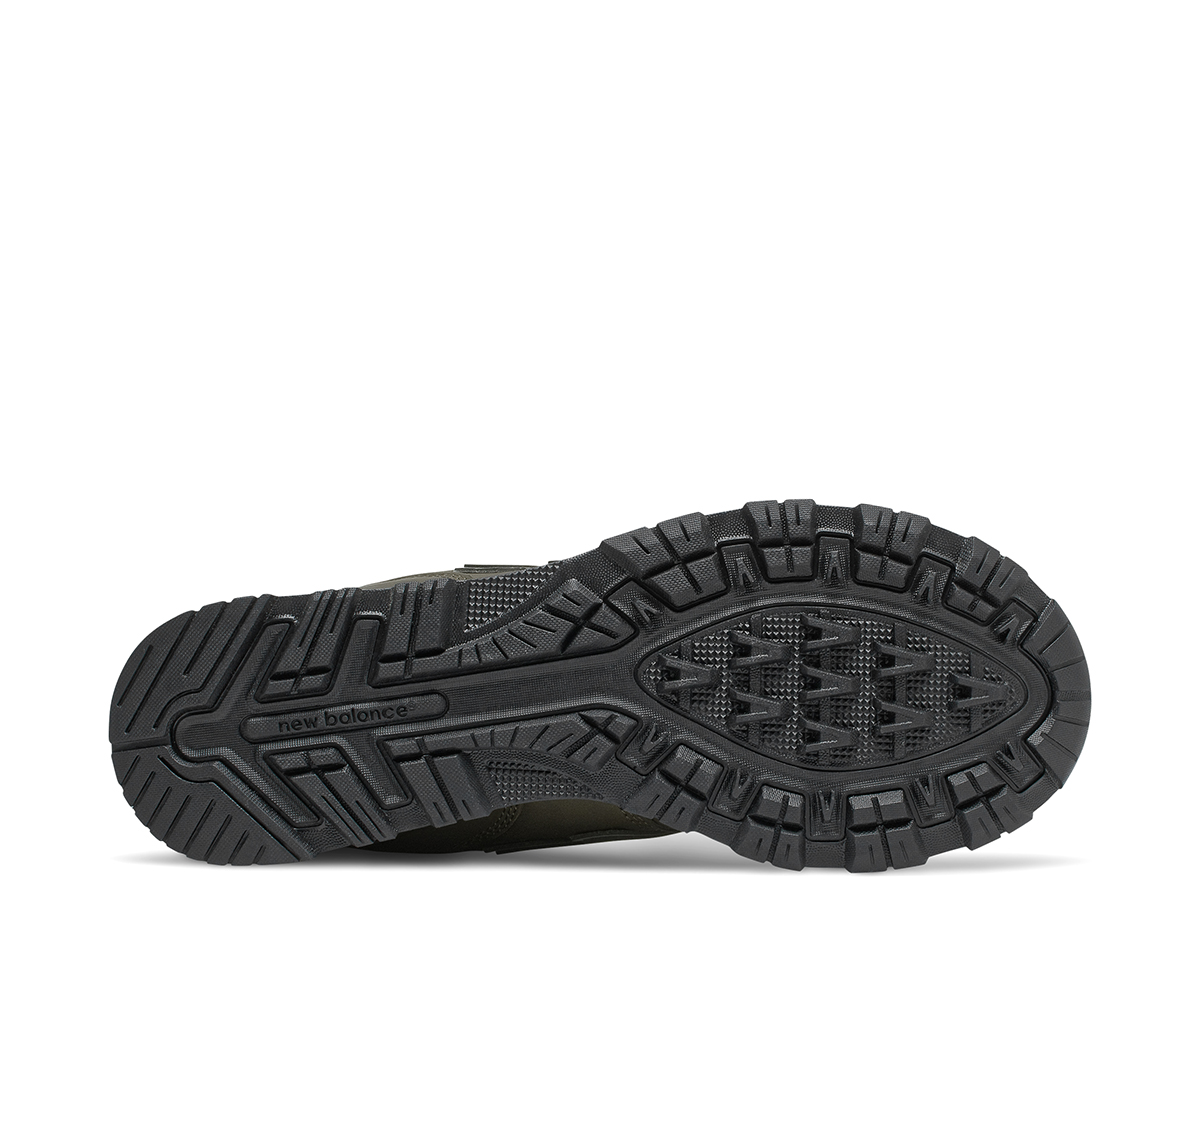 New Balance 574 Boot - Blackened Olive sole